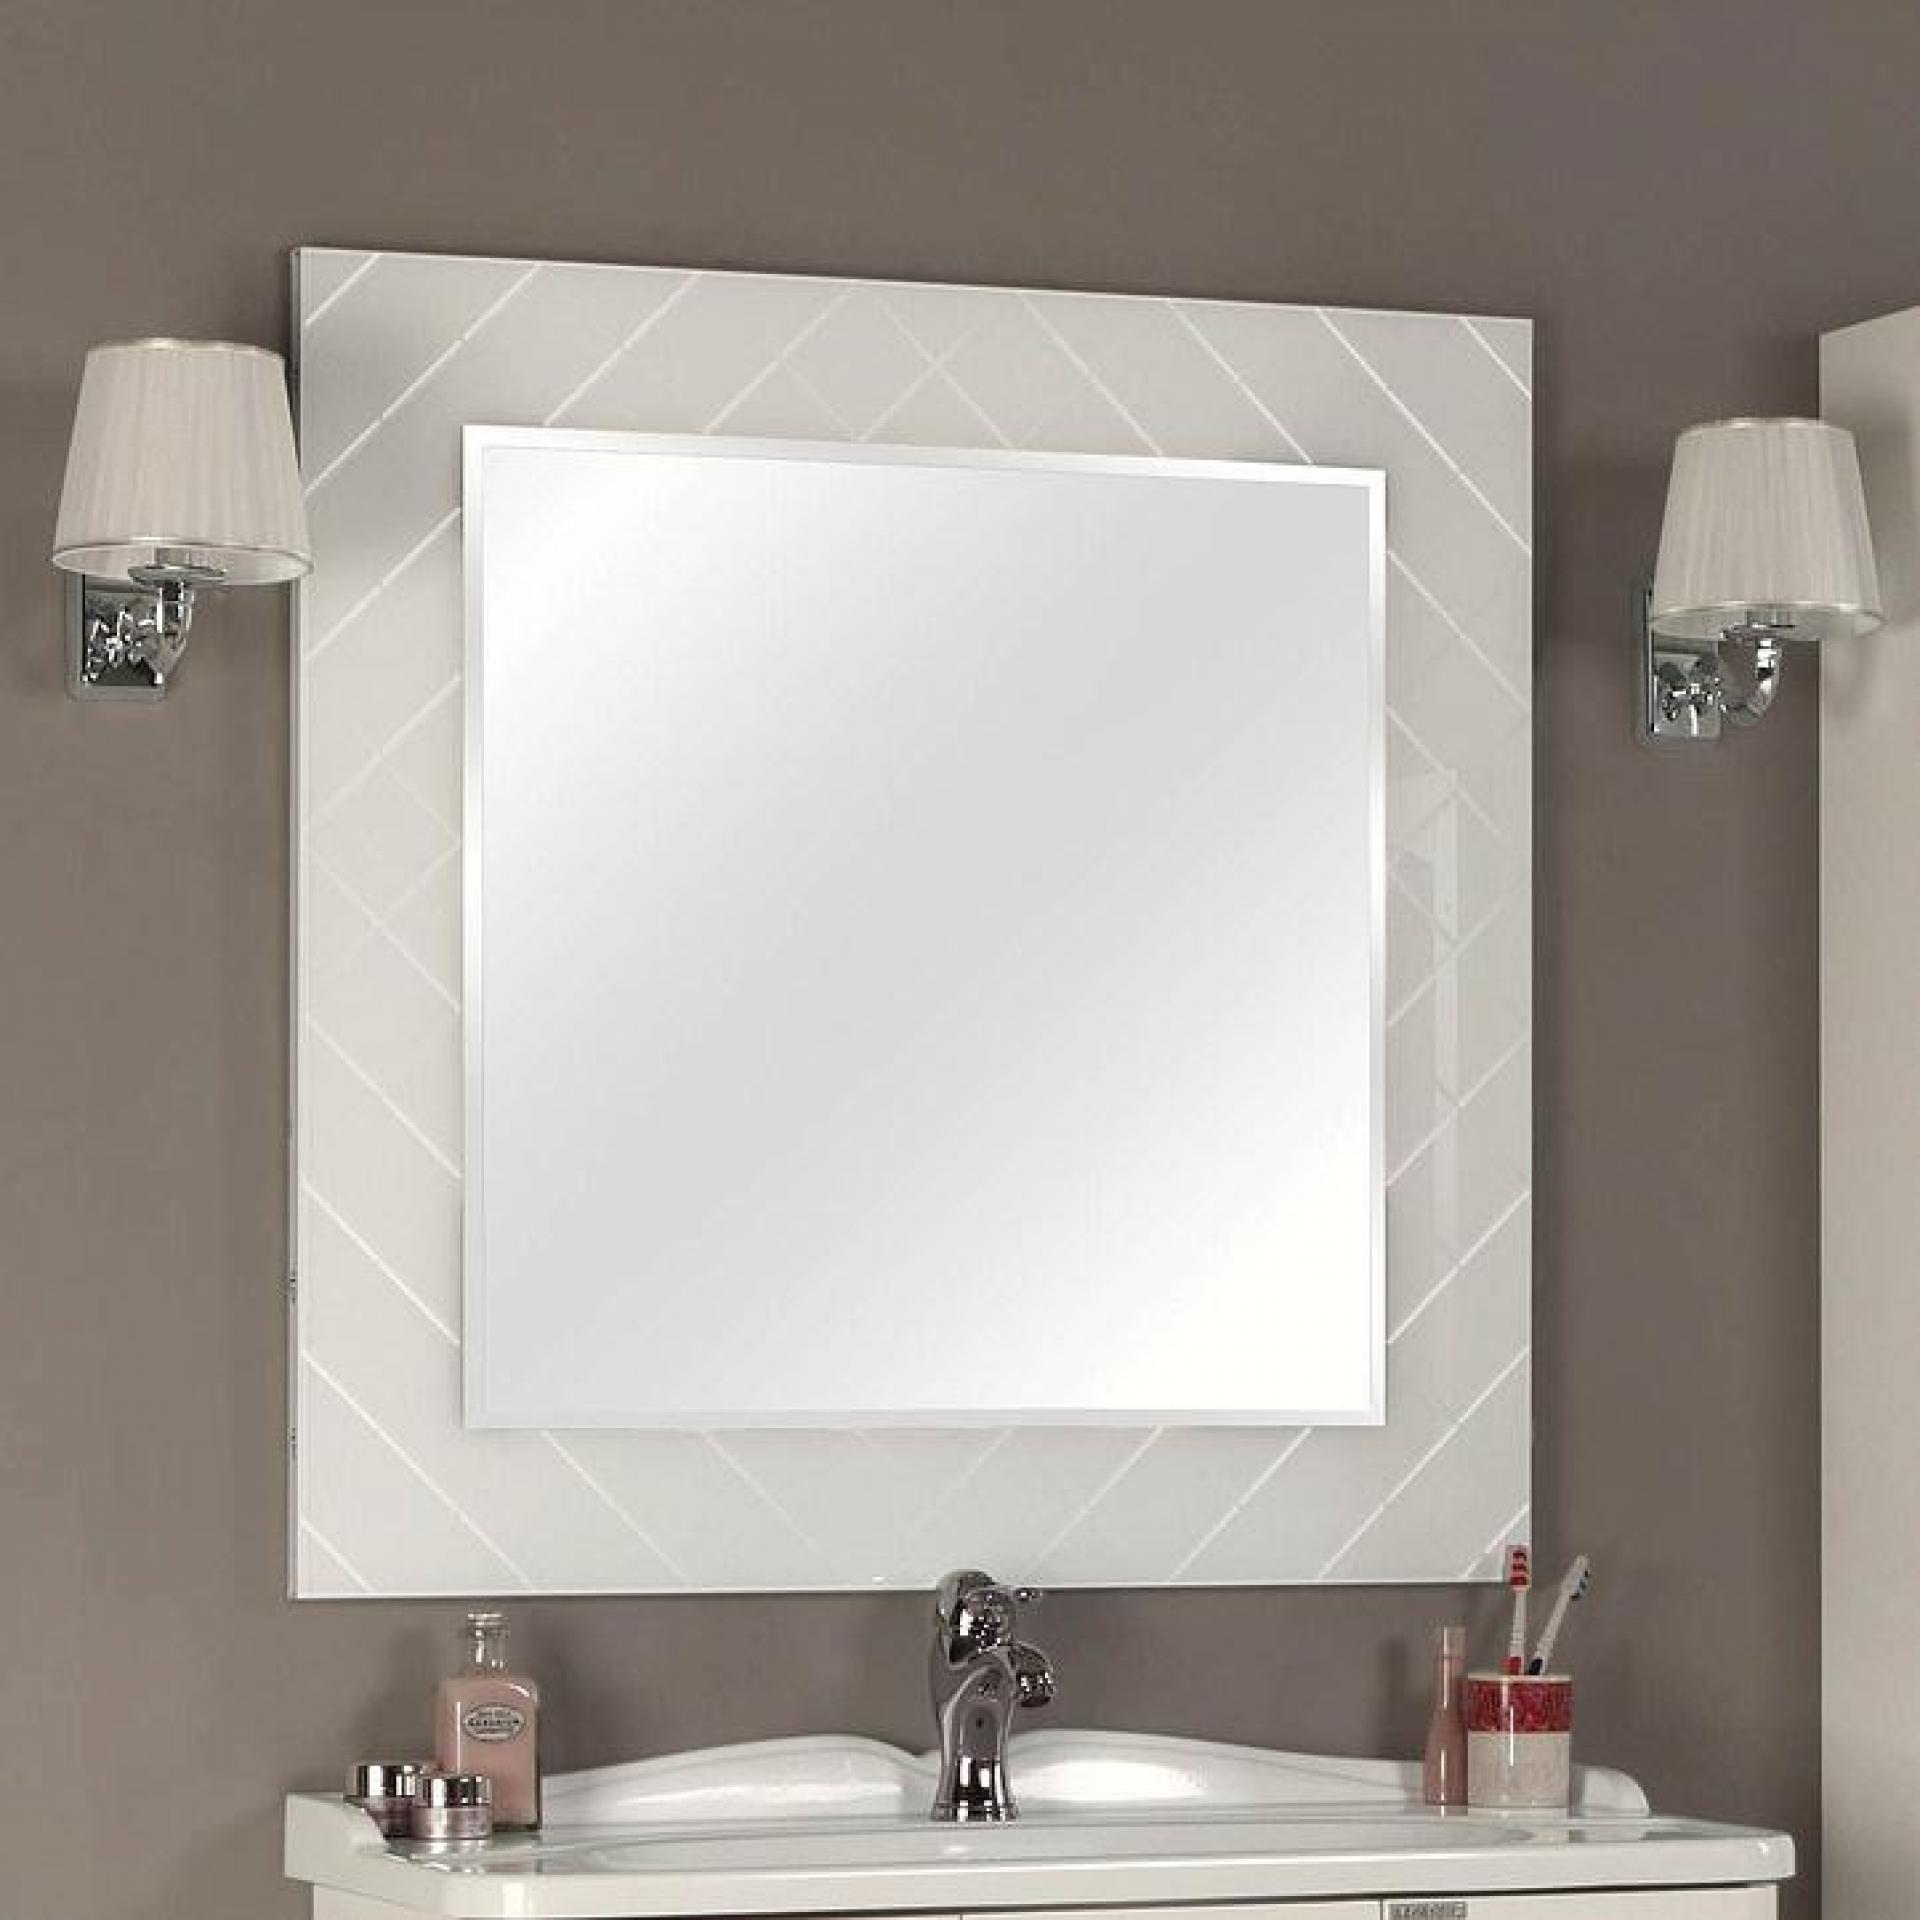 Зеркало 90 см Акватон Венеция 1A155702VNL10 белый